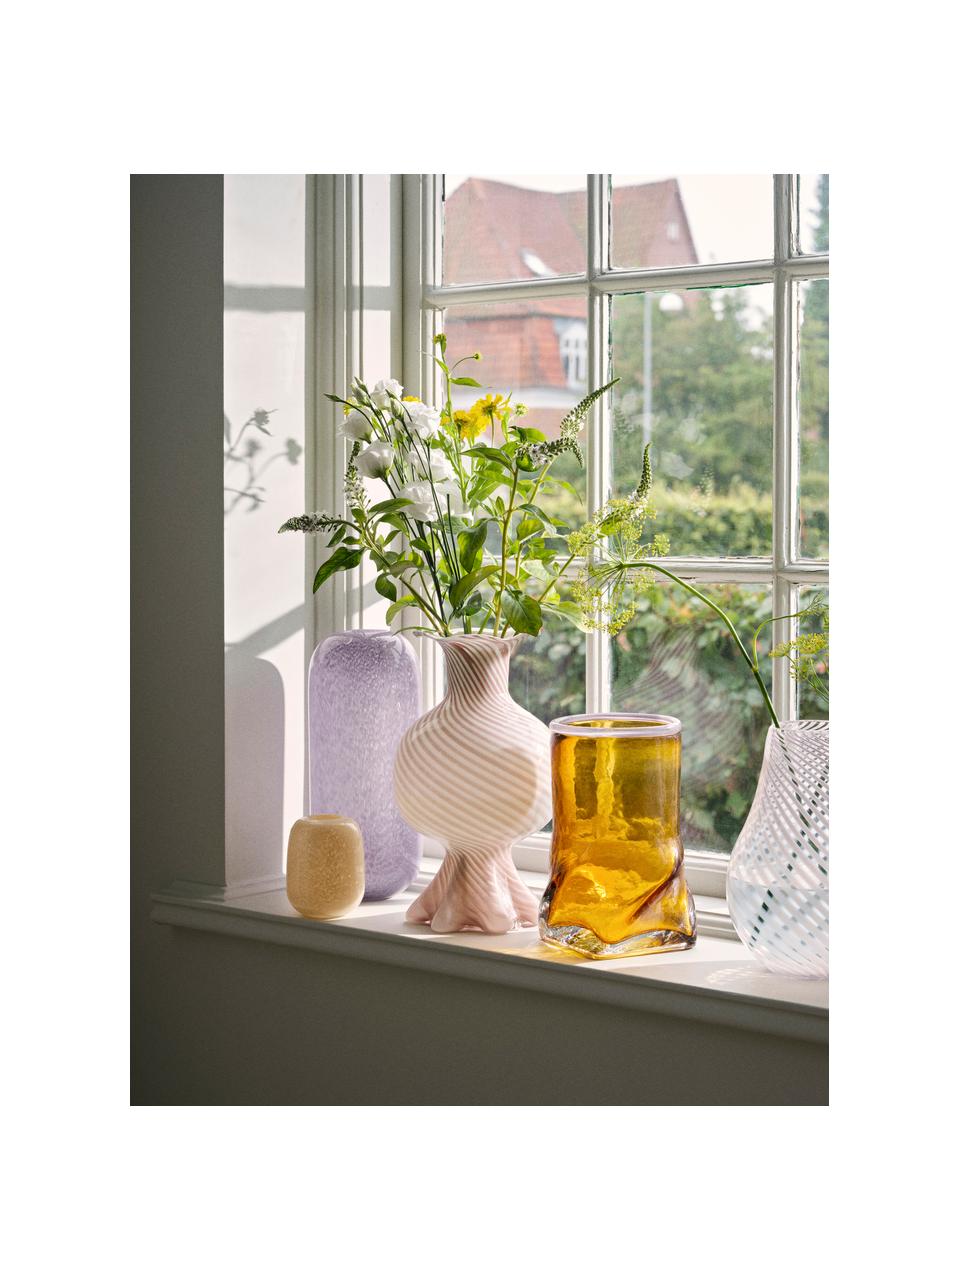 Vaso in vetro soffiato Mella, Vetro soffiato, Rosa chiaro, bianco, Ø 18 x Alt. 30 cm